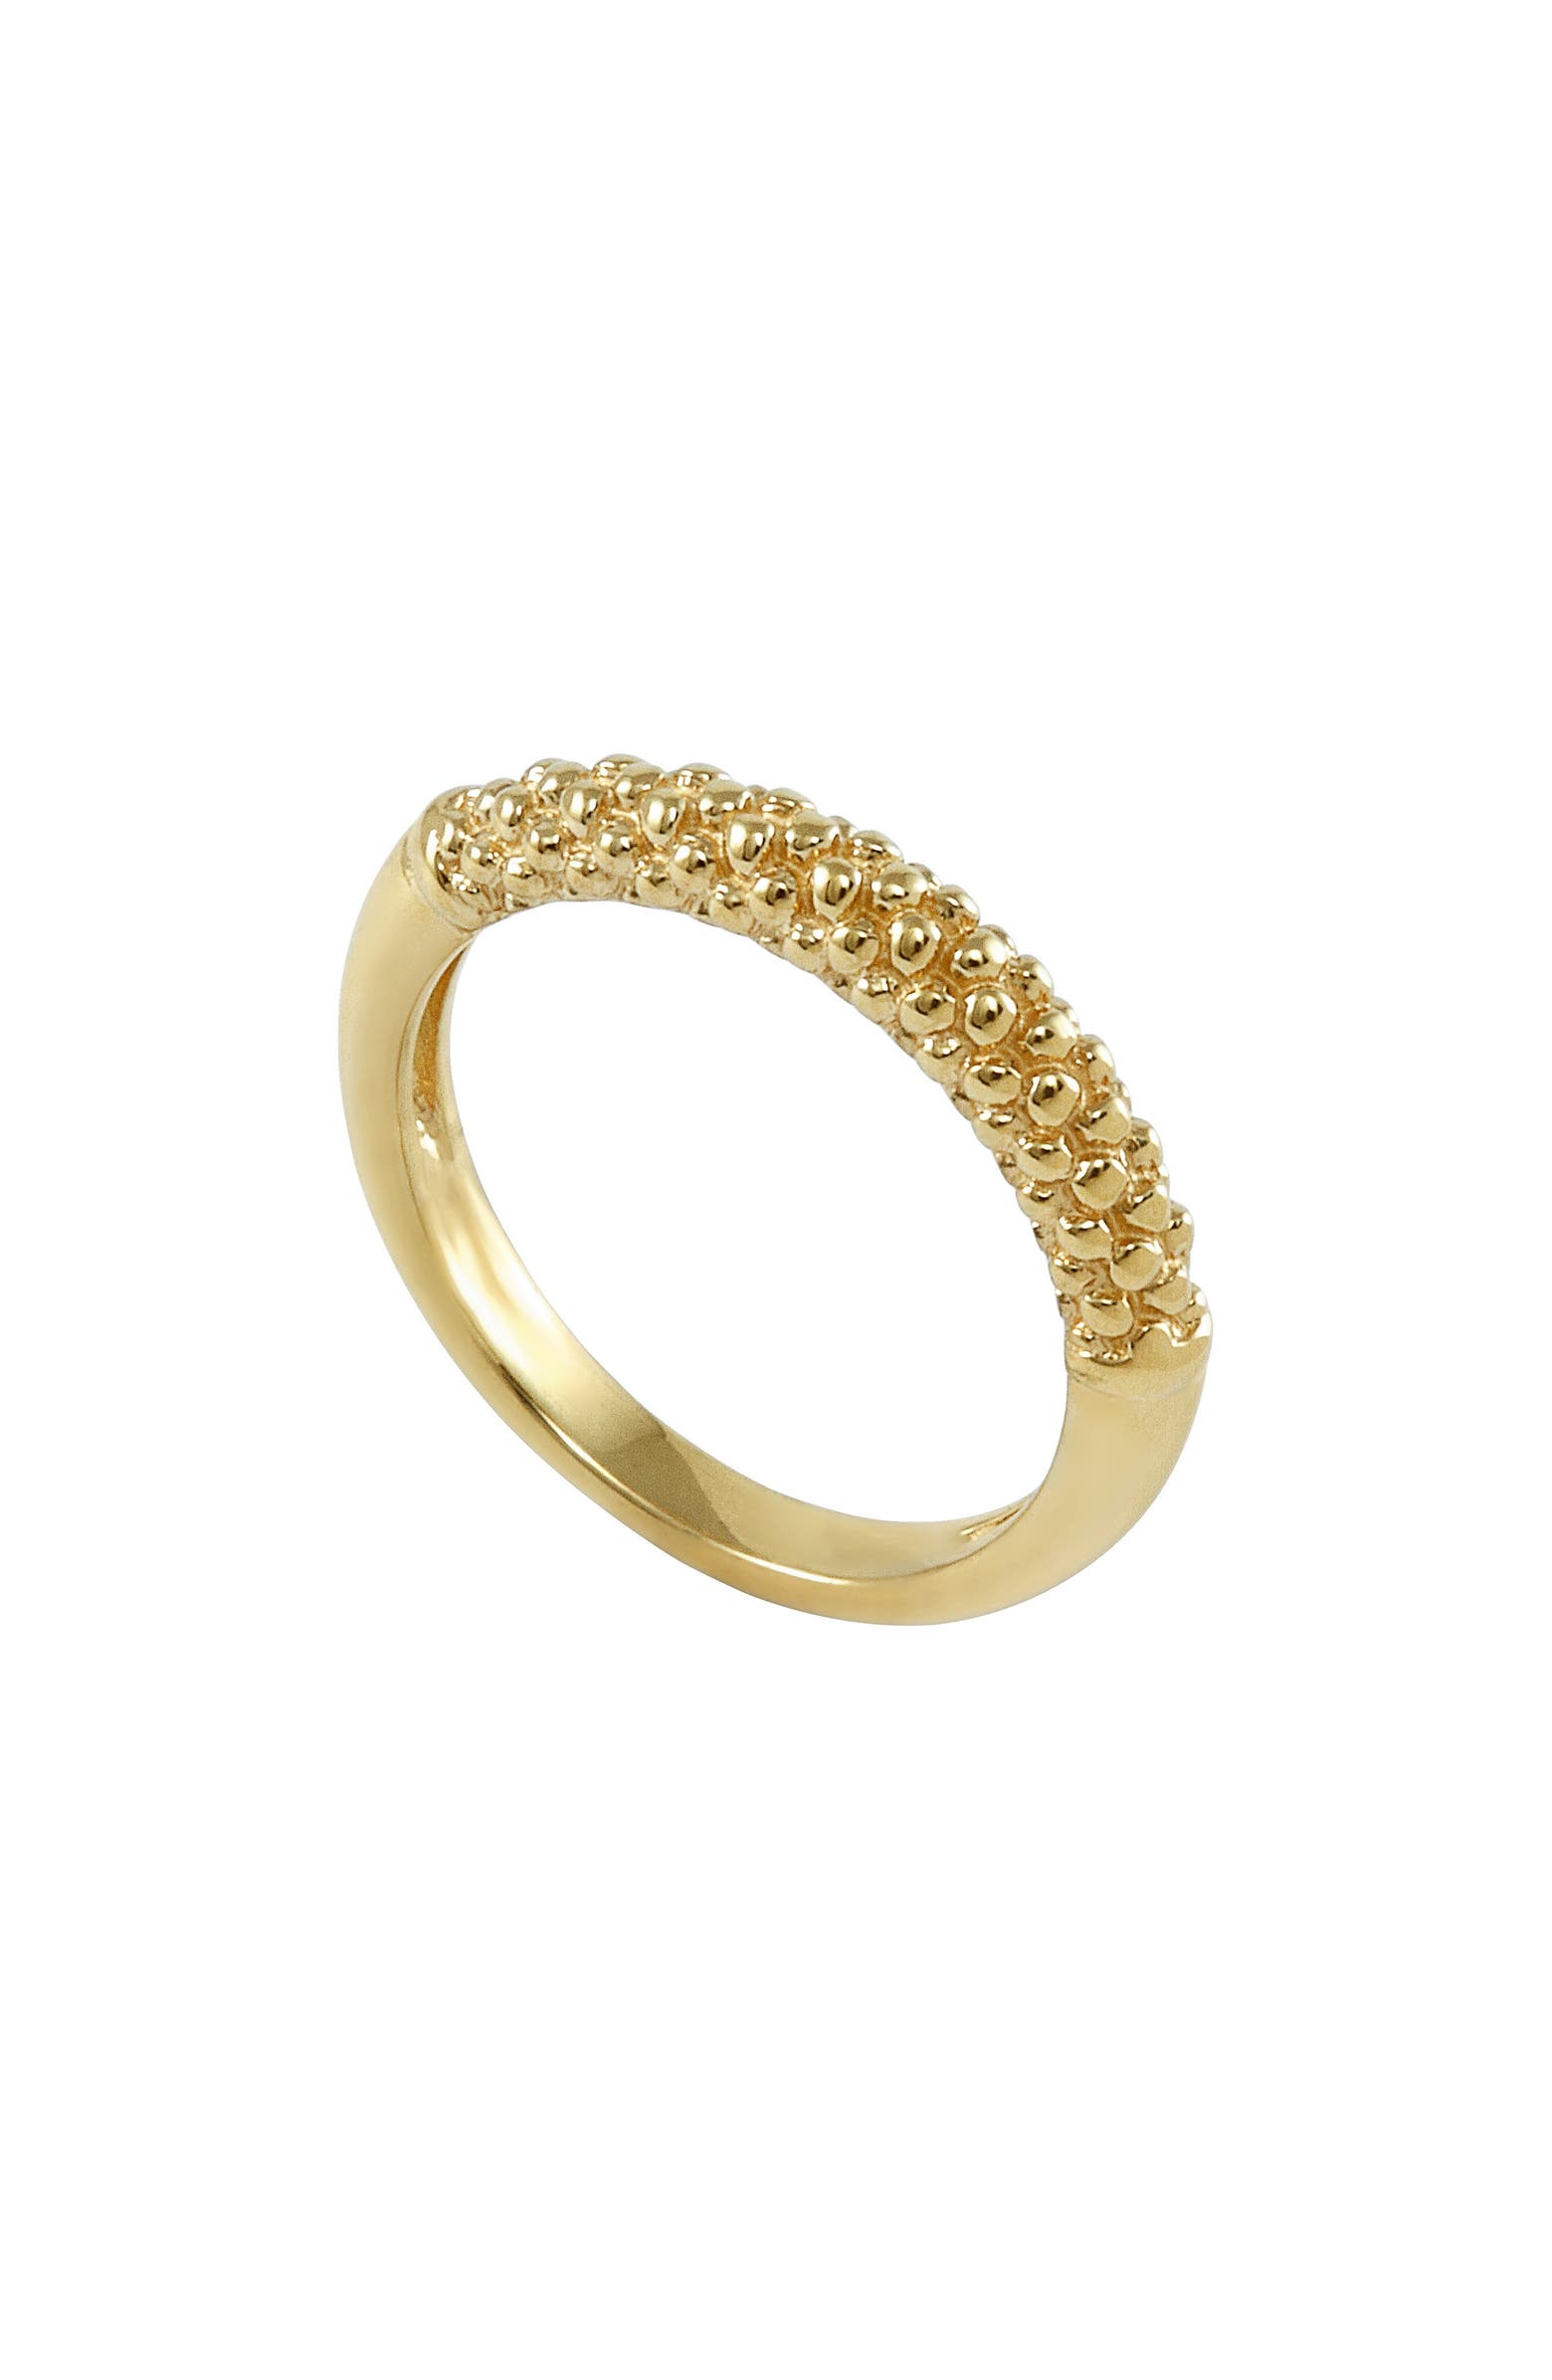 LAGOS Caviar Band Ring | Nordstrom